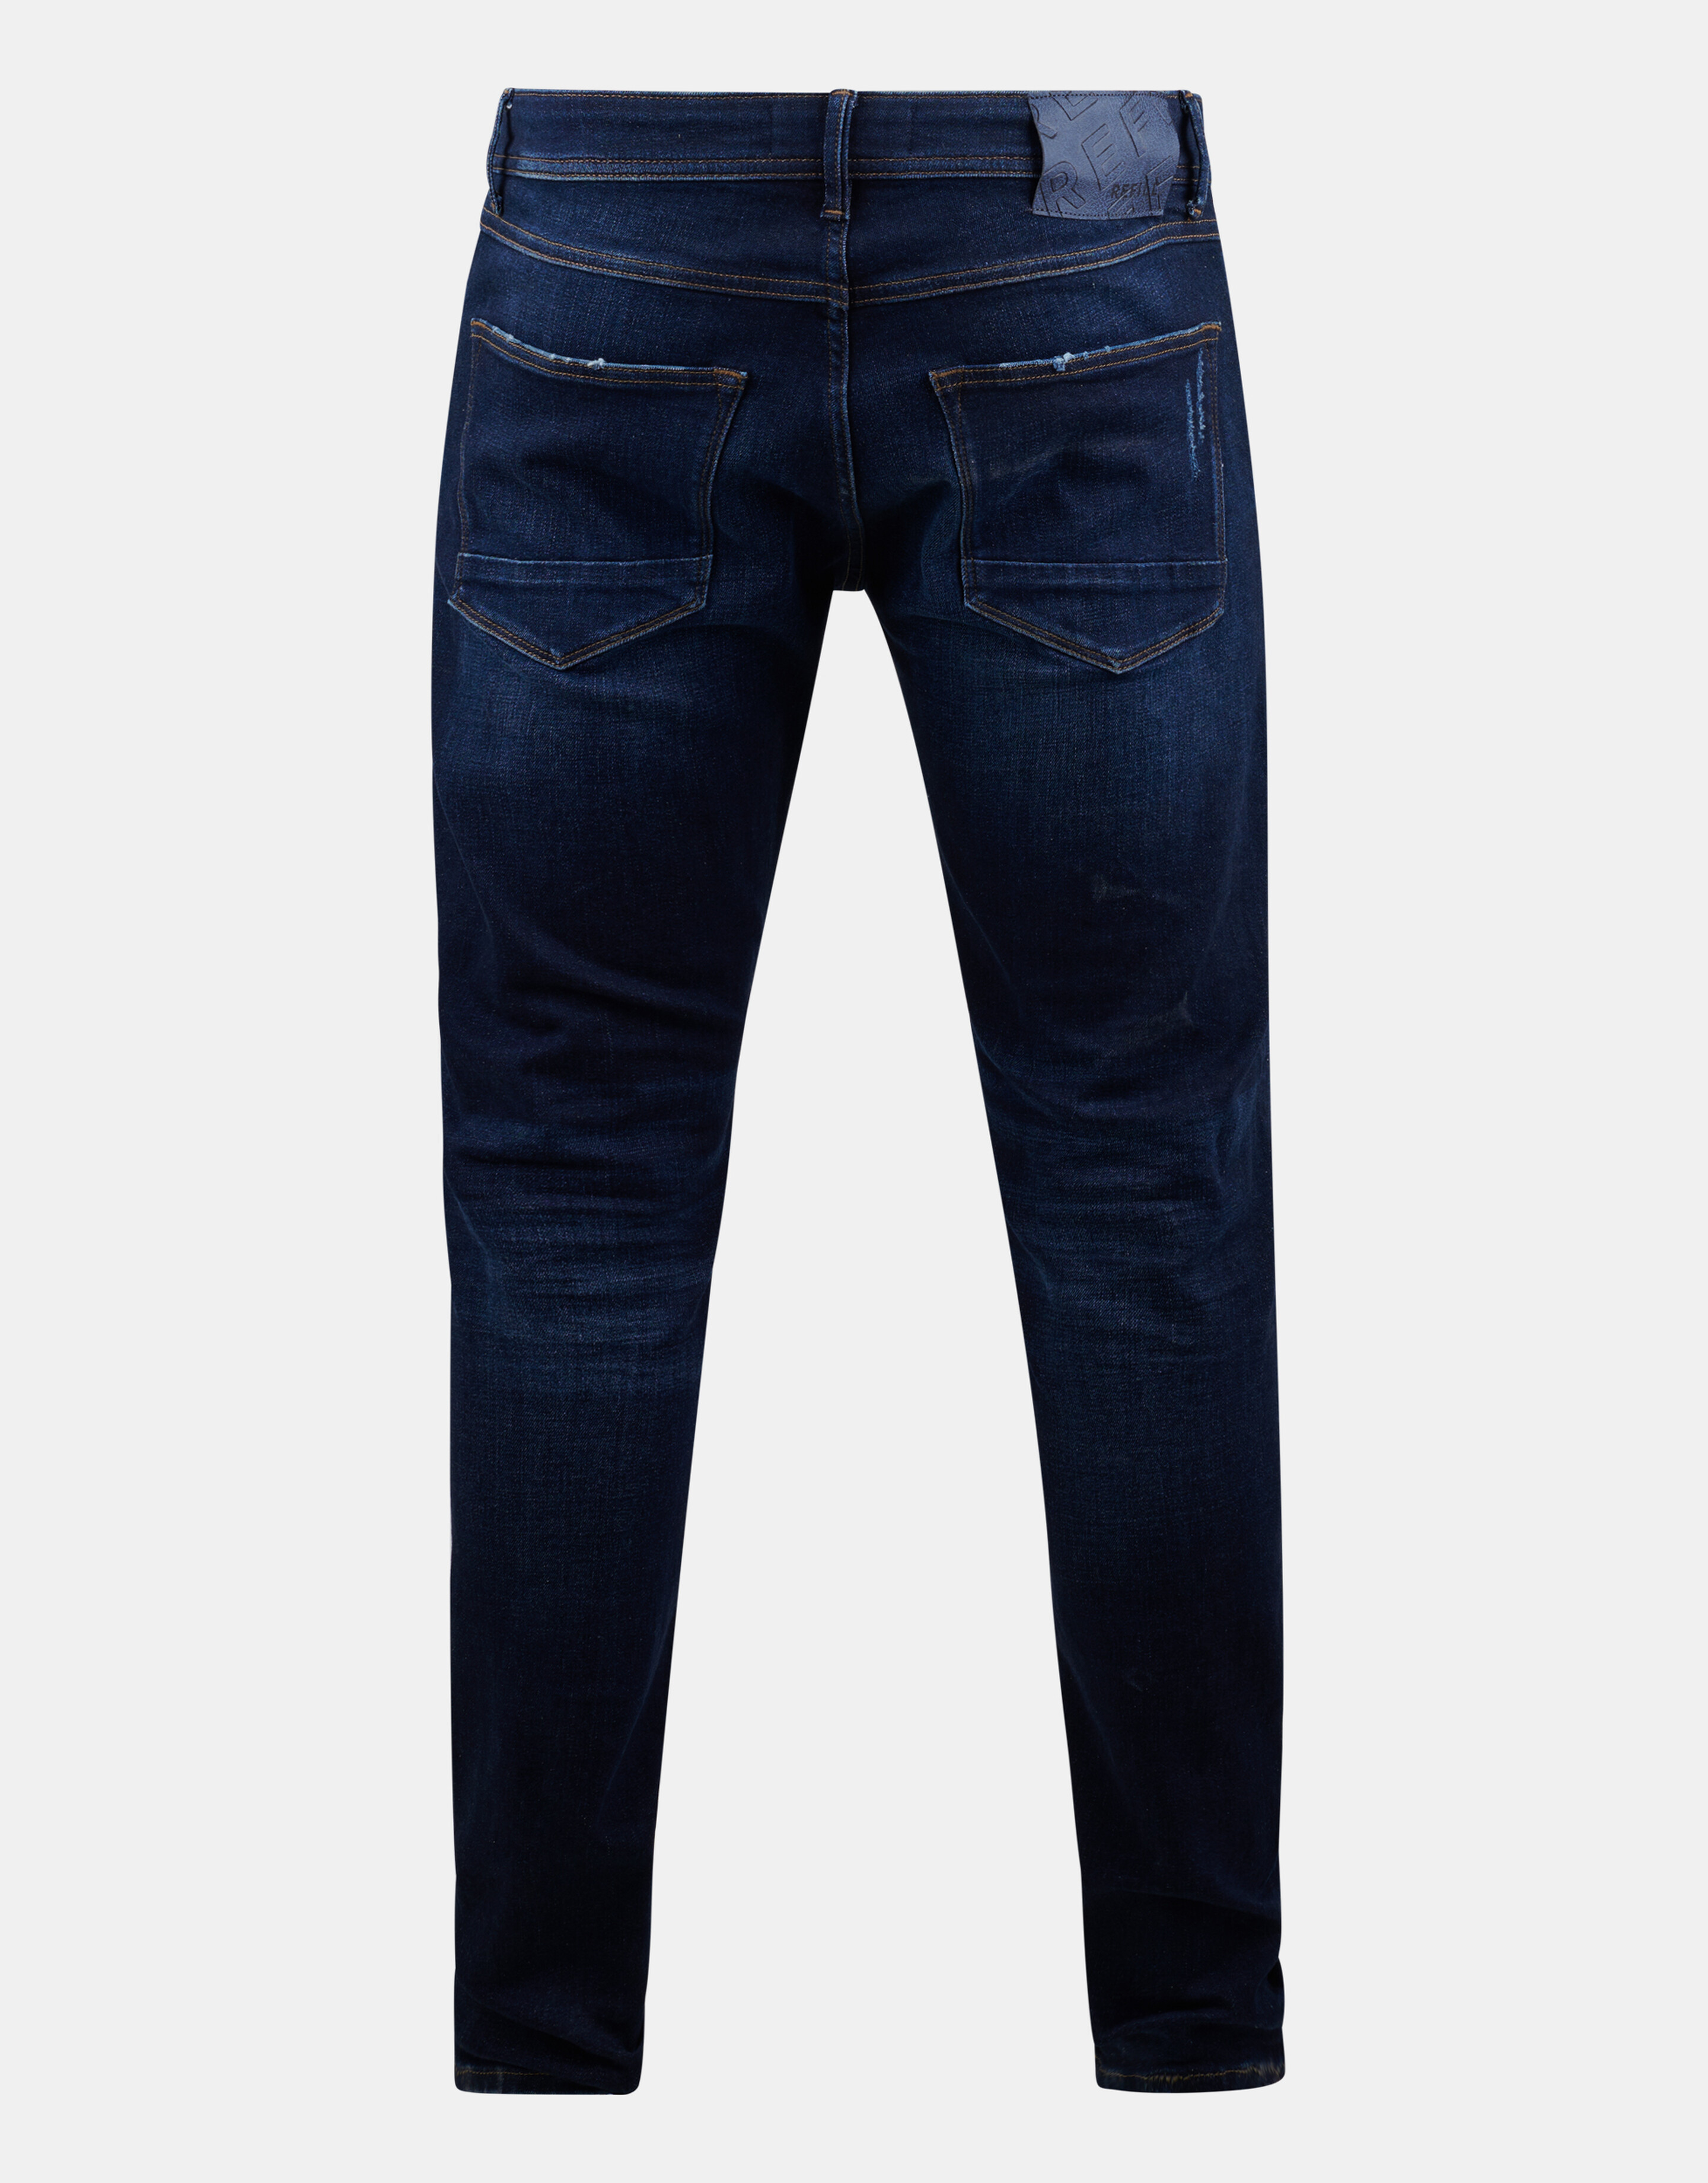 Leroy Skinny Hunter Jeans L32 Refill